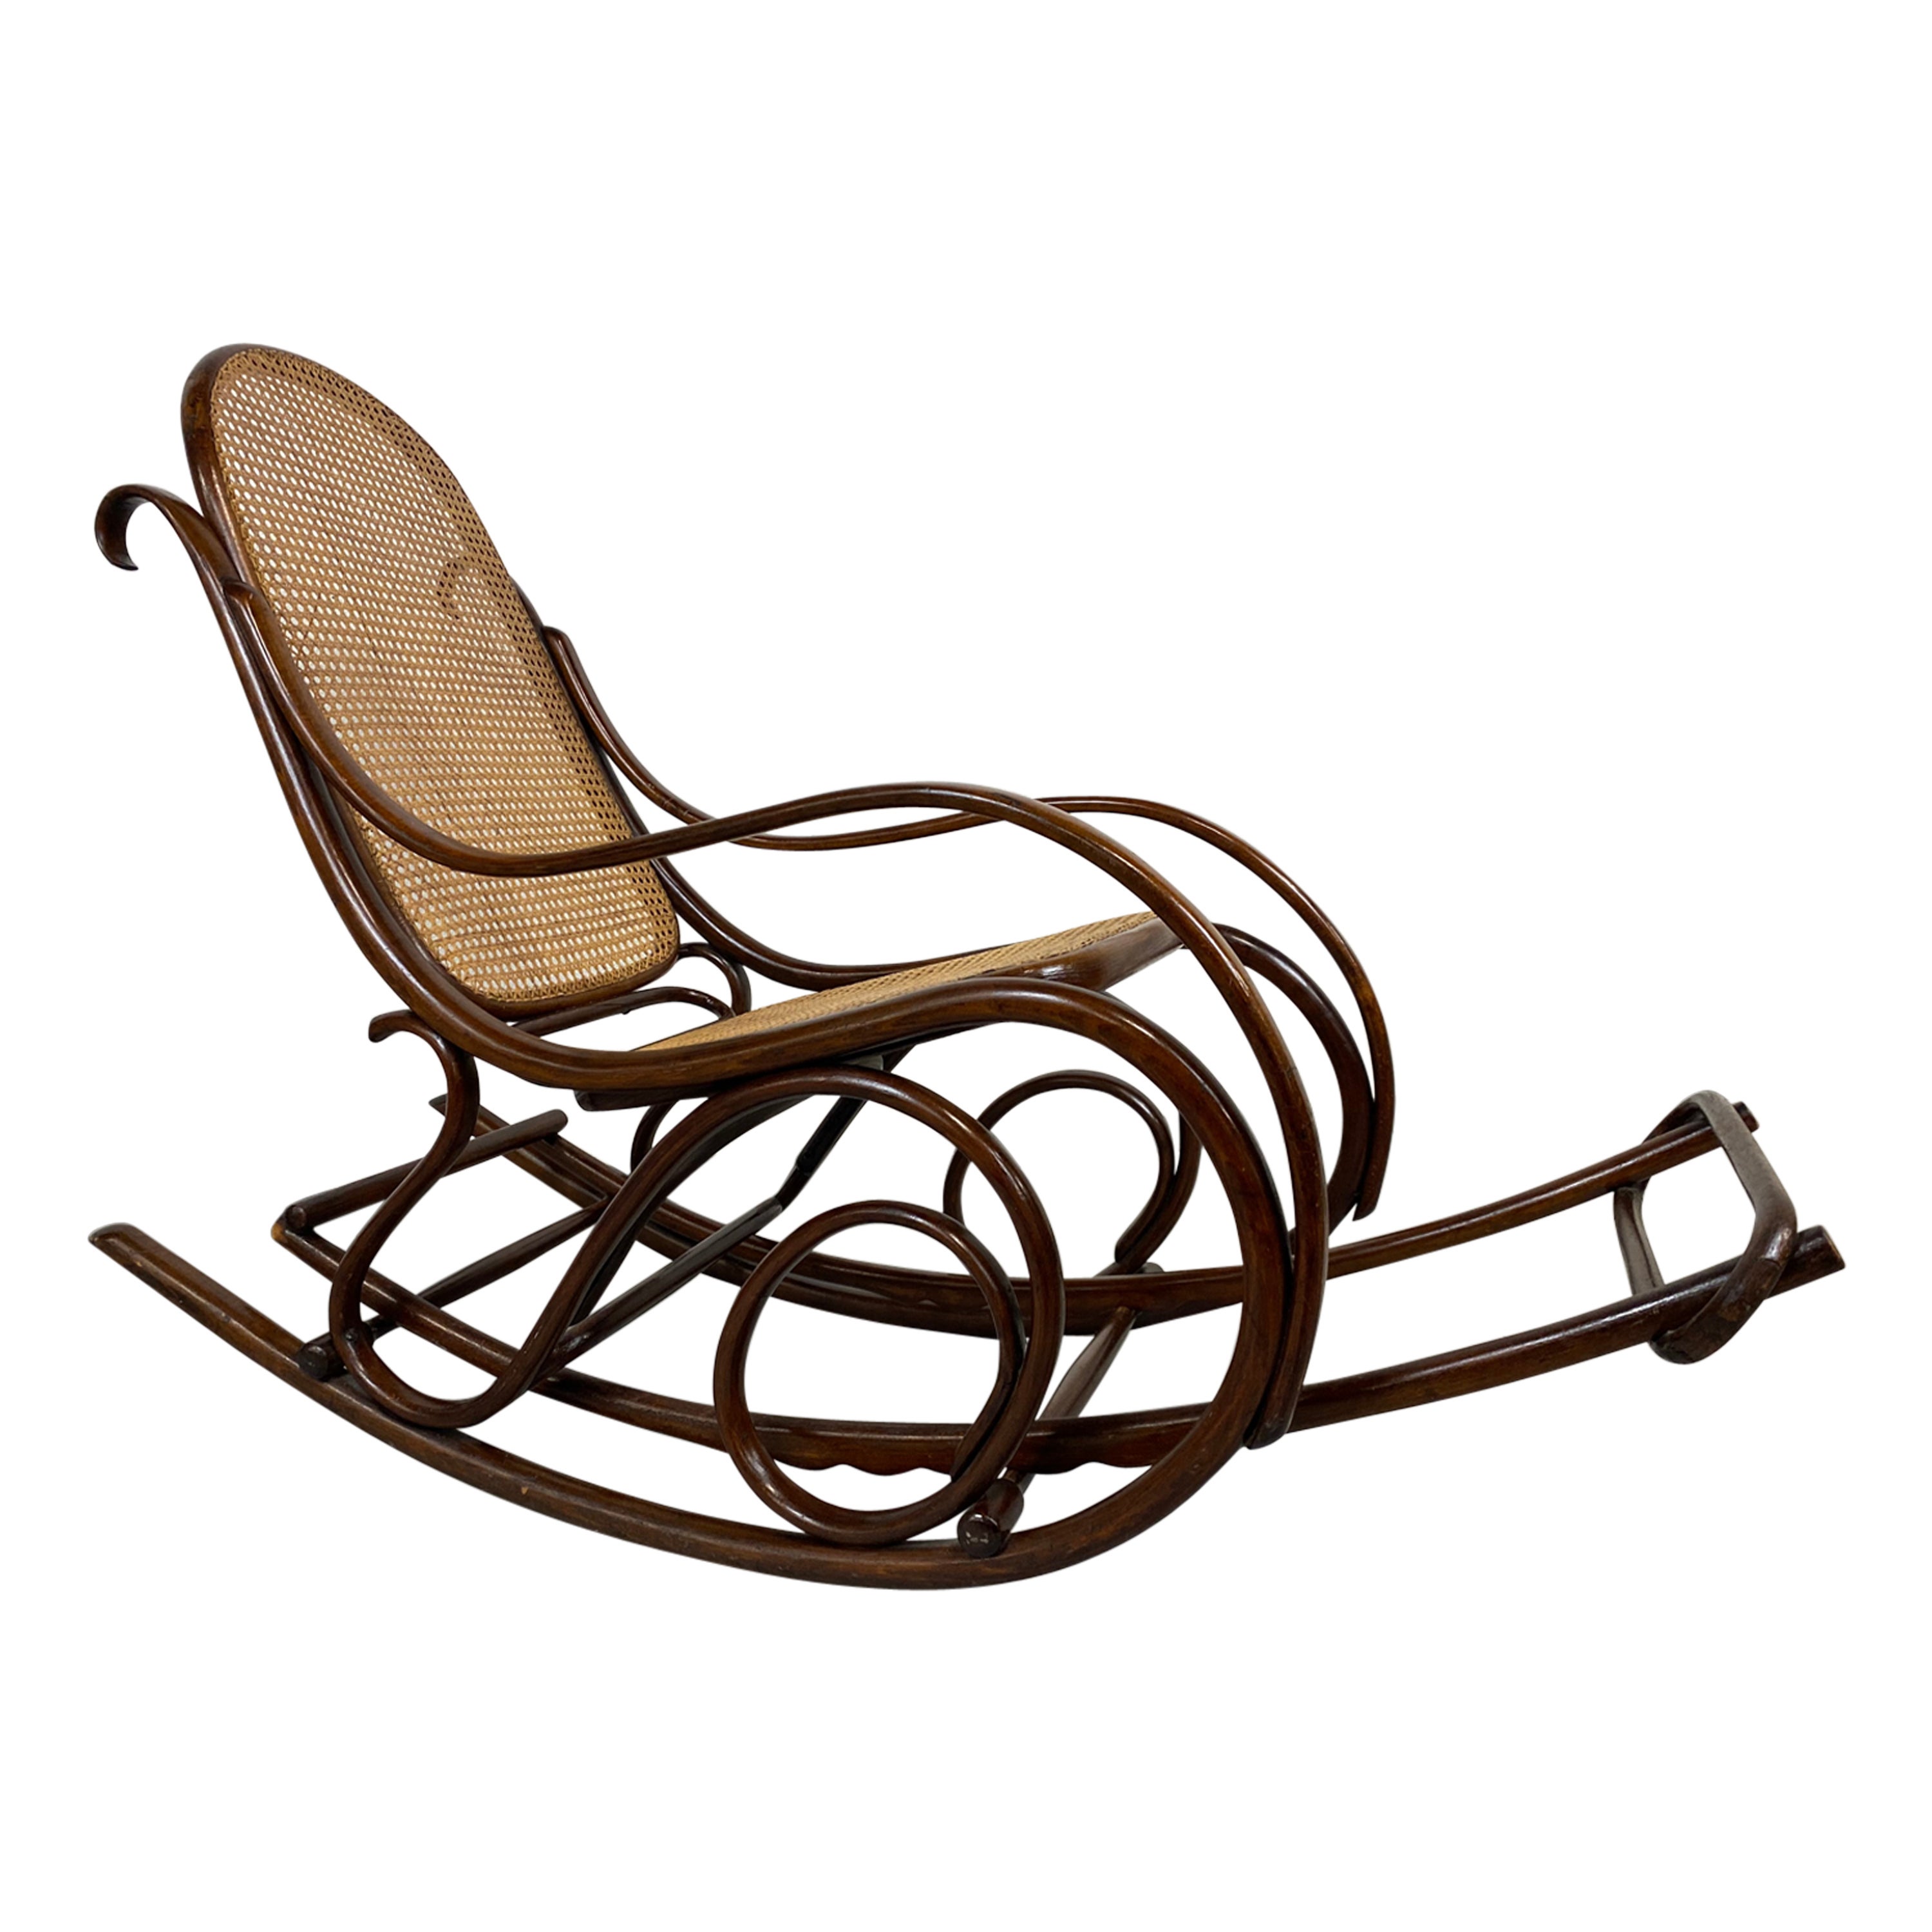 How do I identify a Thonet rocking chair?